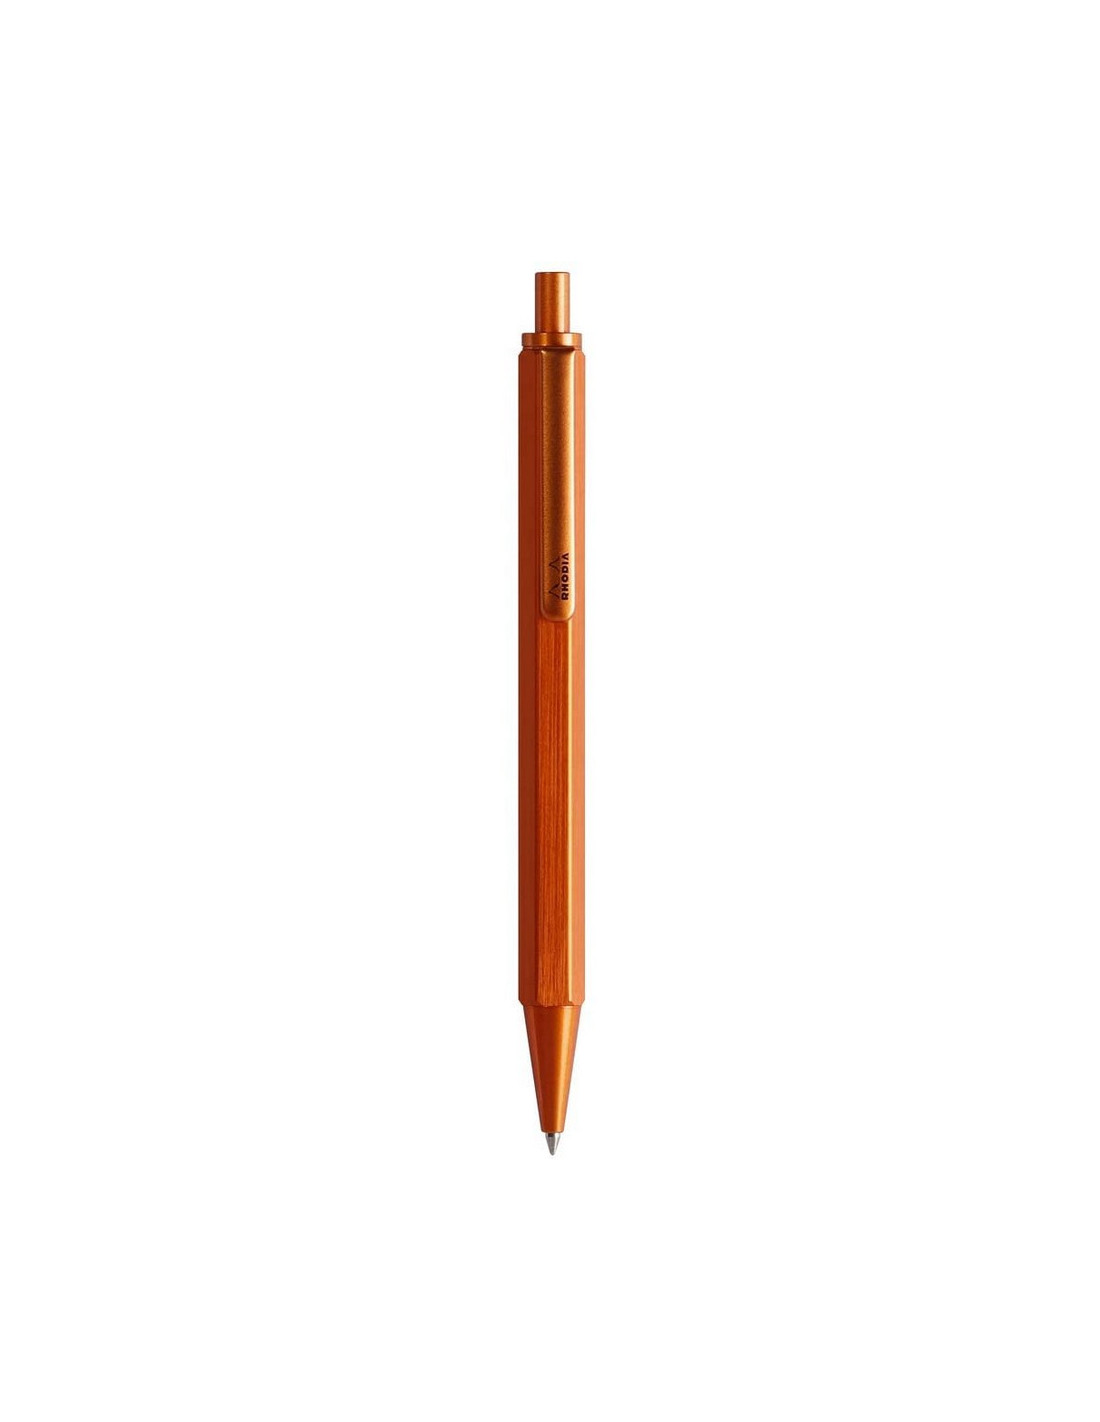 Rhodia Mechanical Pencil Orange